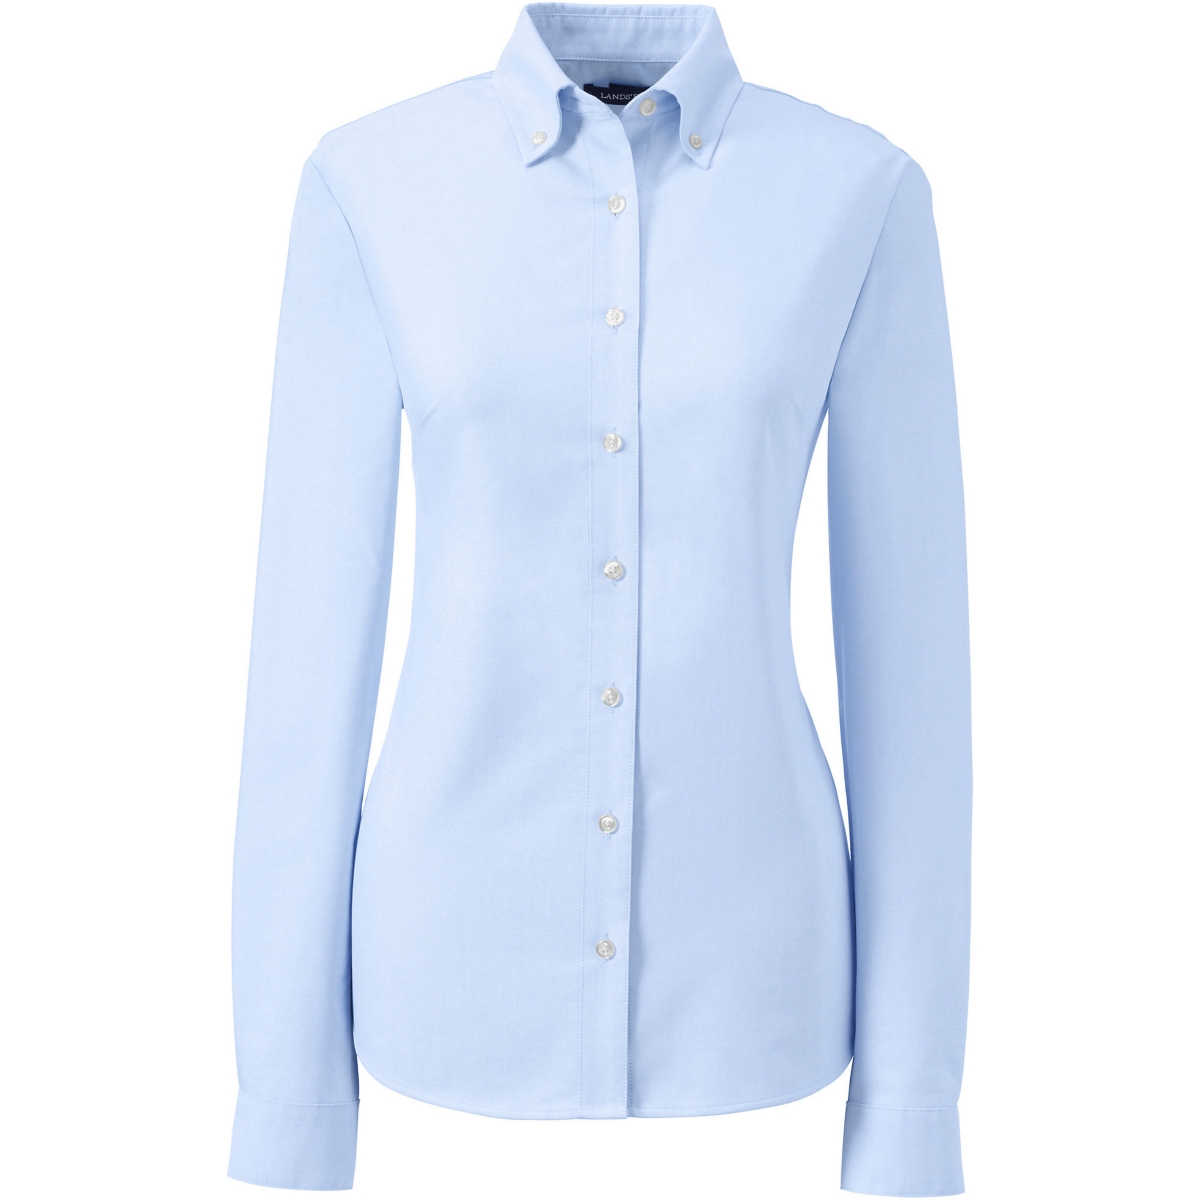 Women's School Uniform Long Sleeve Oxford Dress Shirt - White